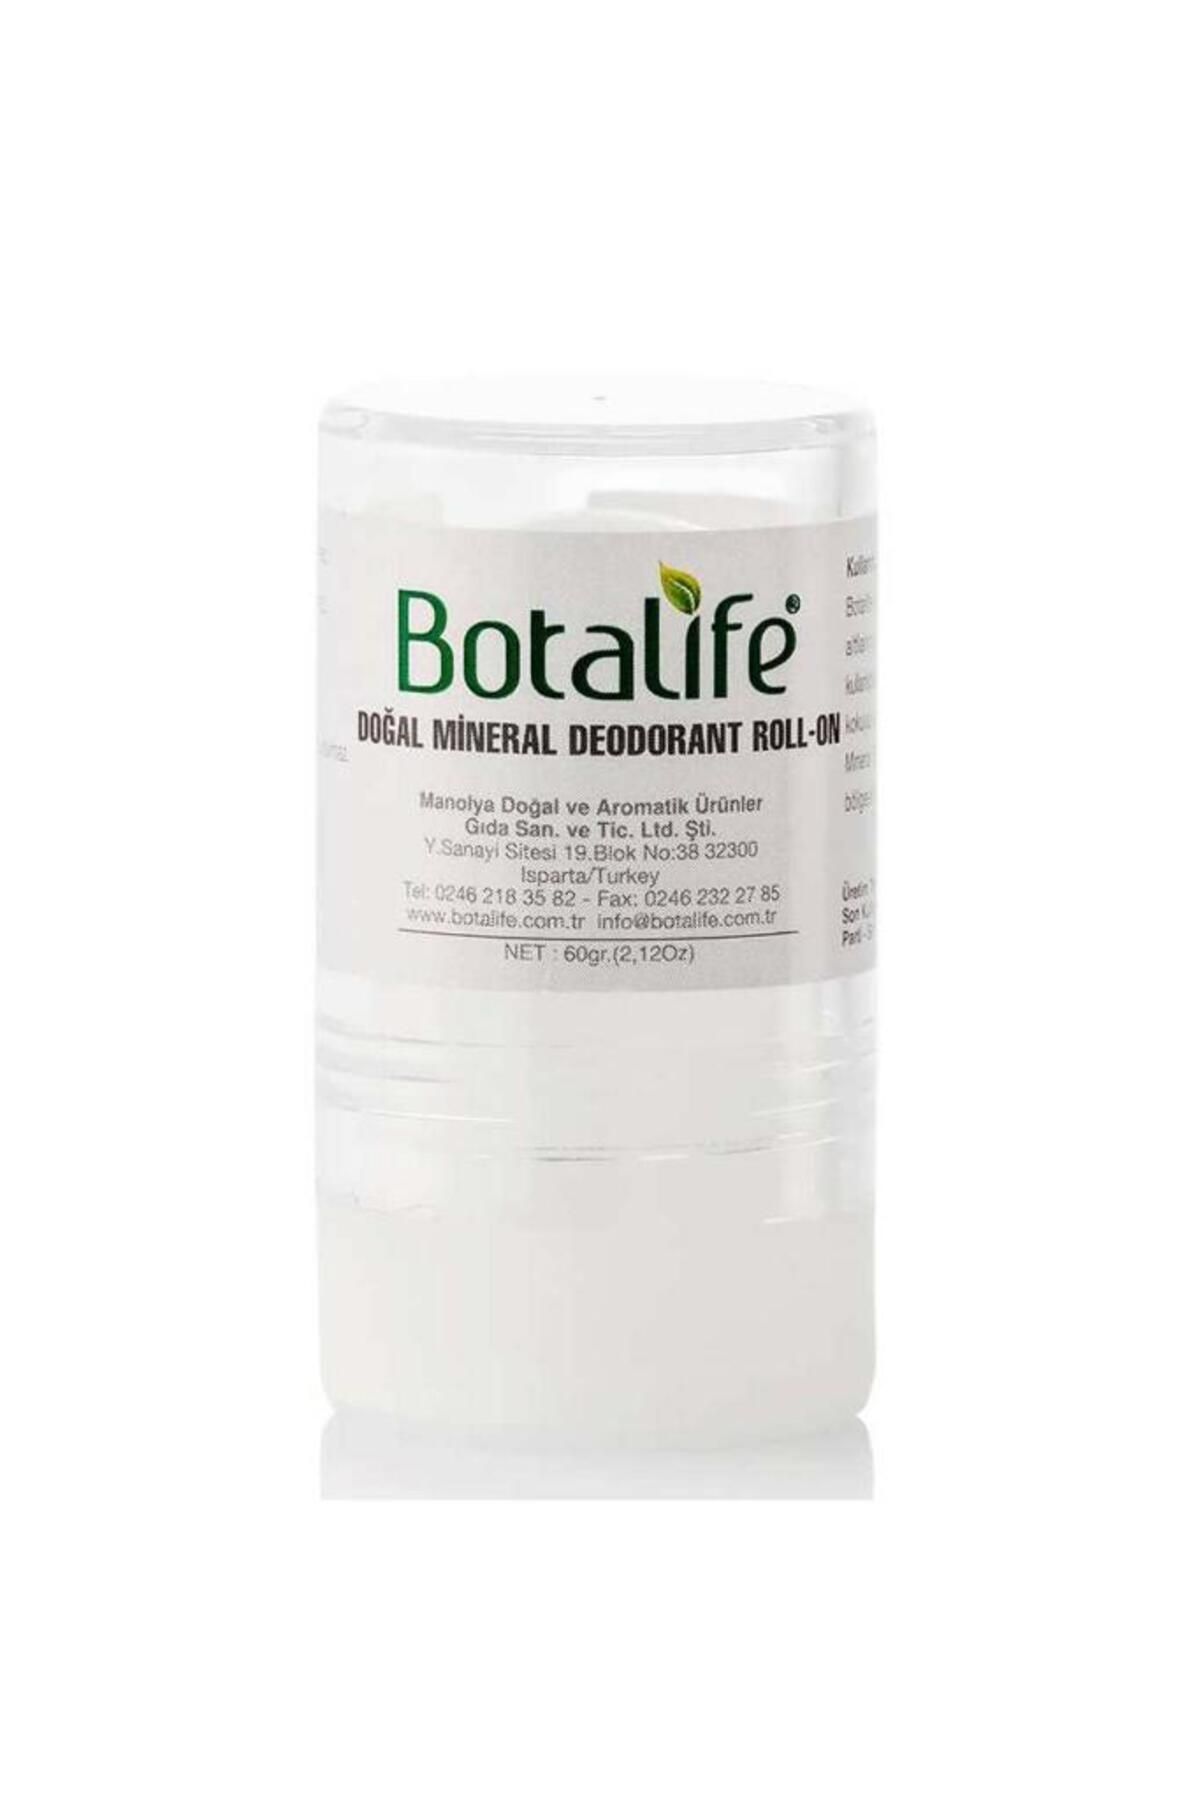 Botalife Doğal Mineral Deodorant Roll On 60g